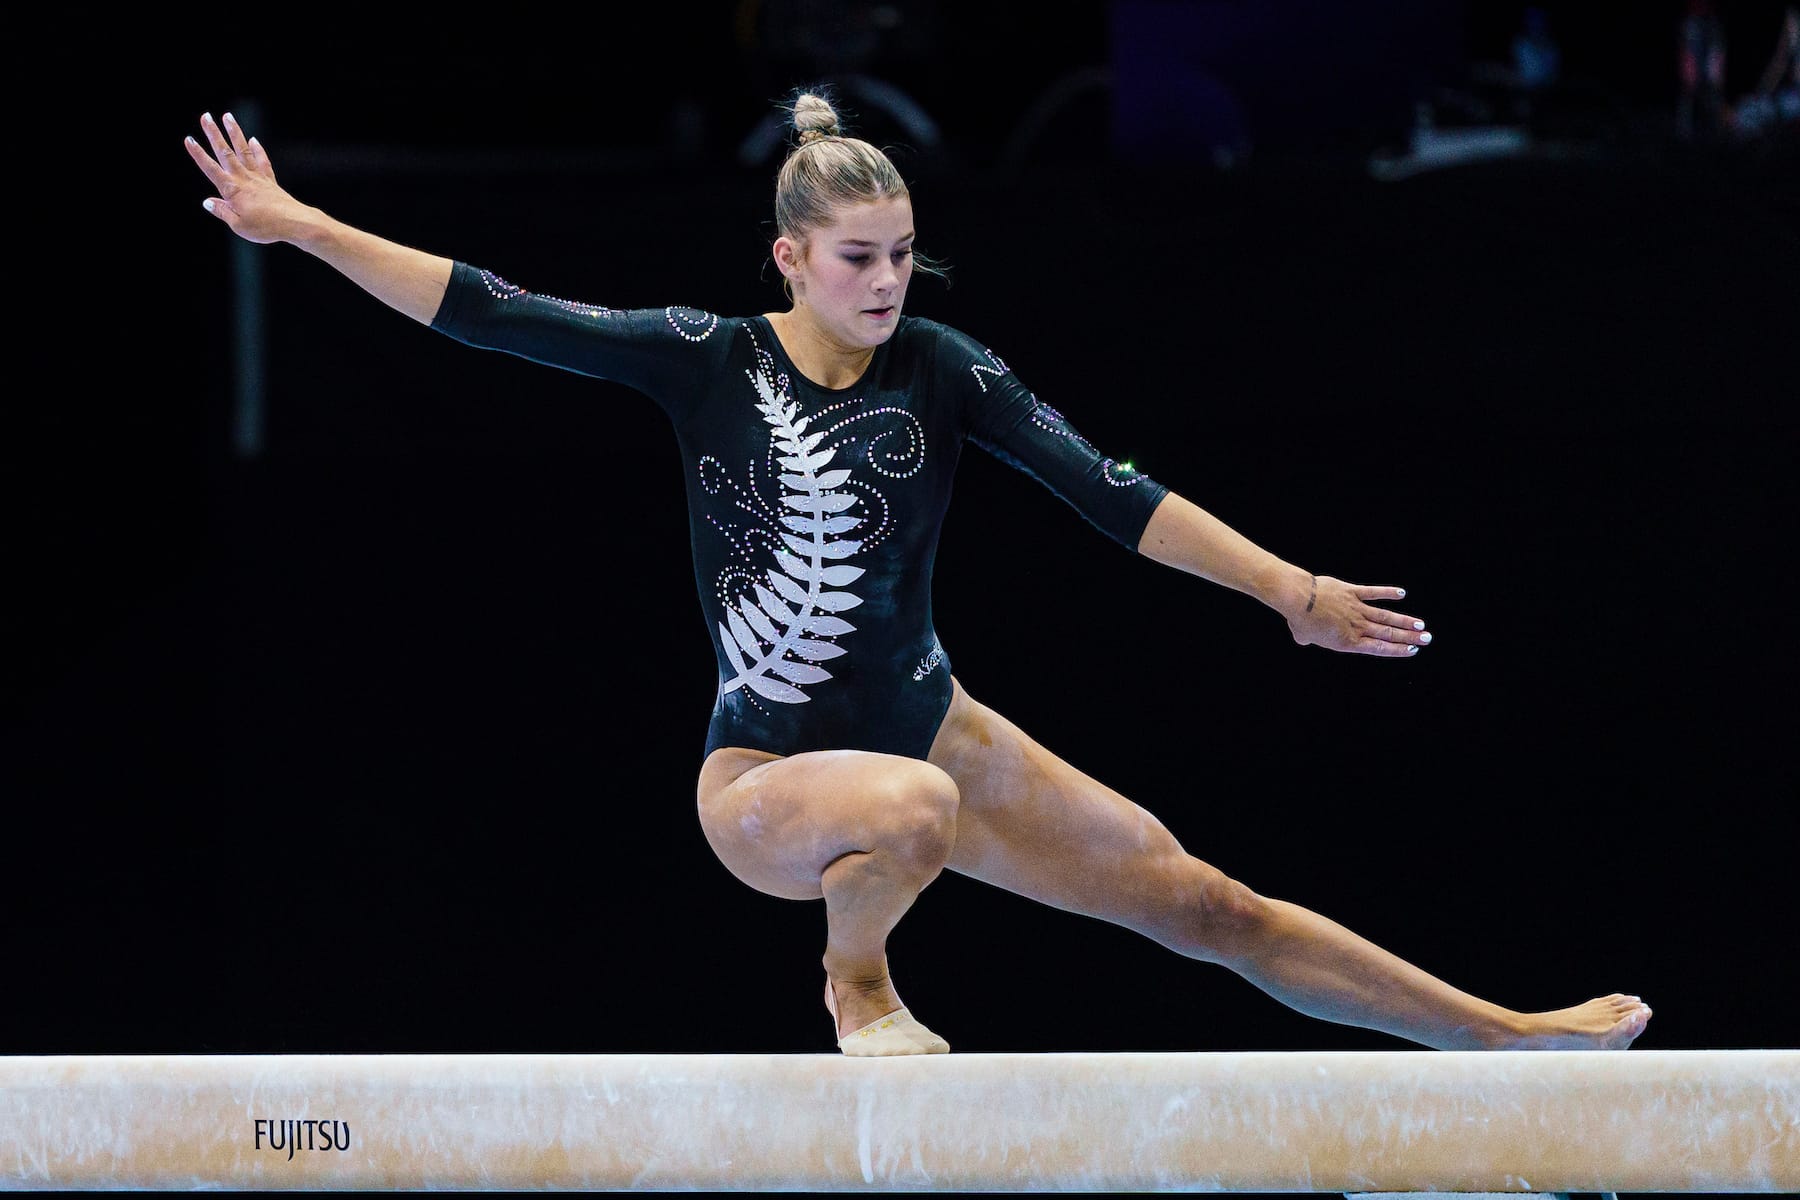 leggings and shorts over leotards allowed new zeland female gymnasts